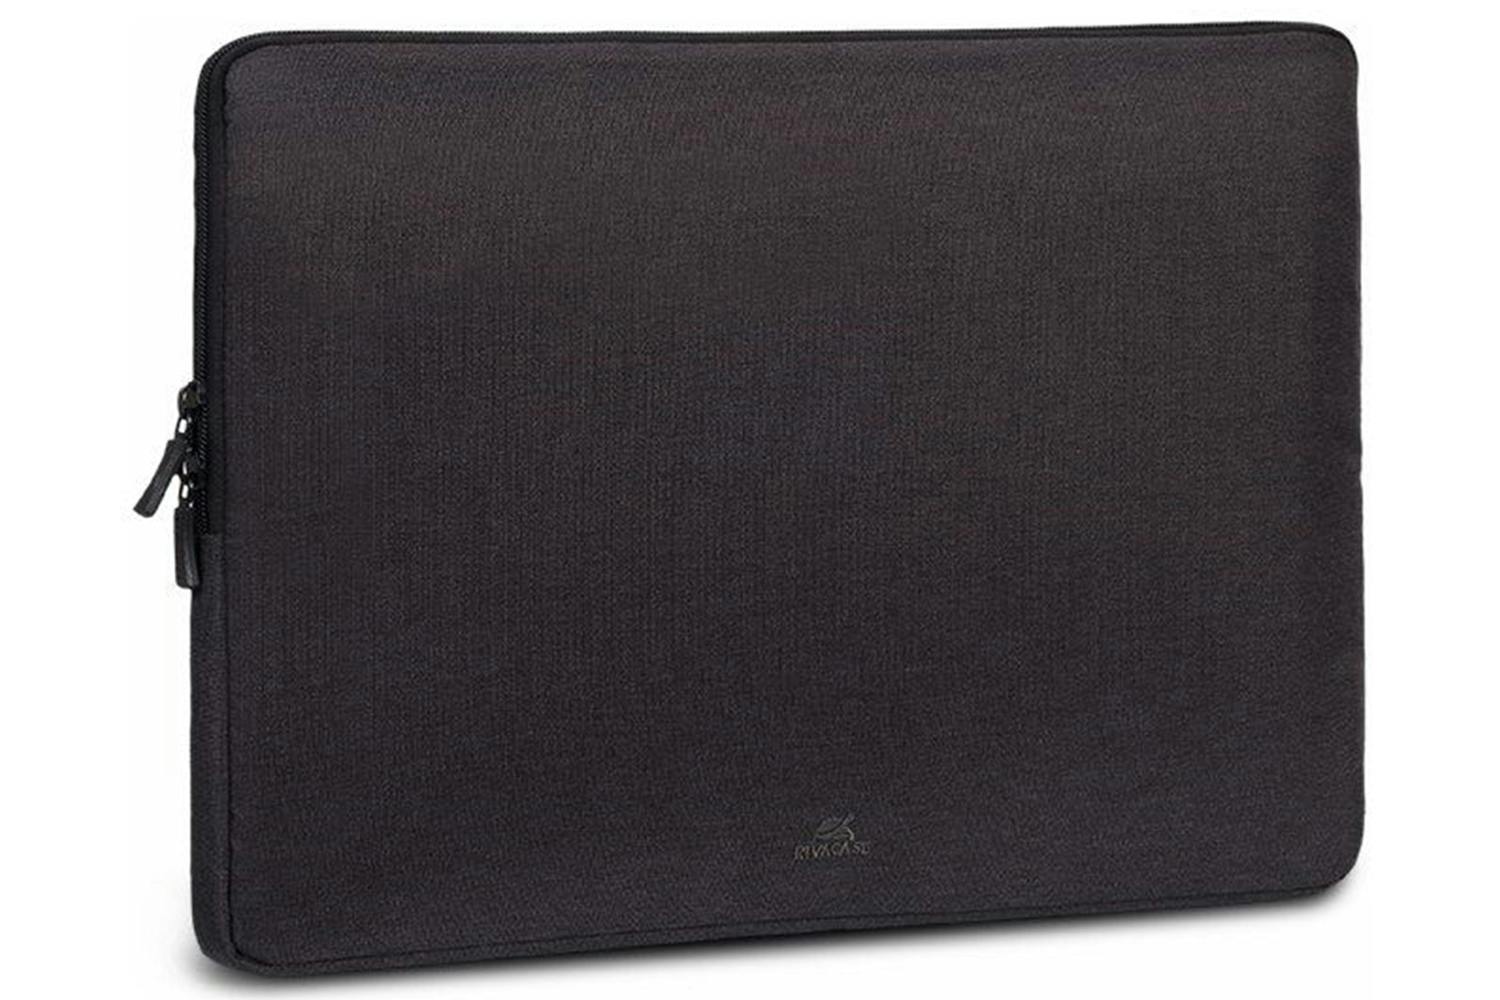 Rivacase 15.6" Laptop Sleeve | Black